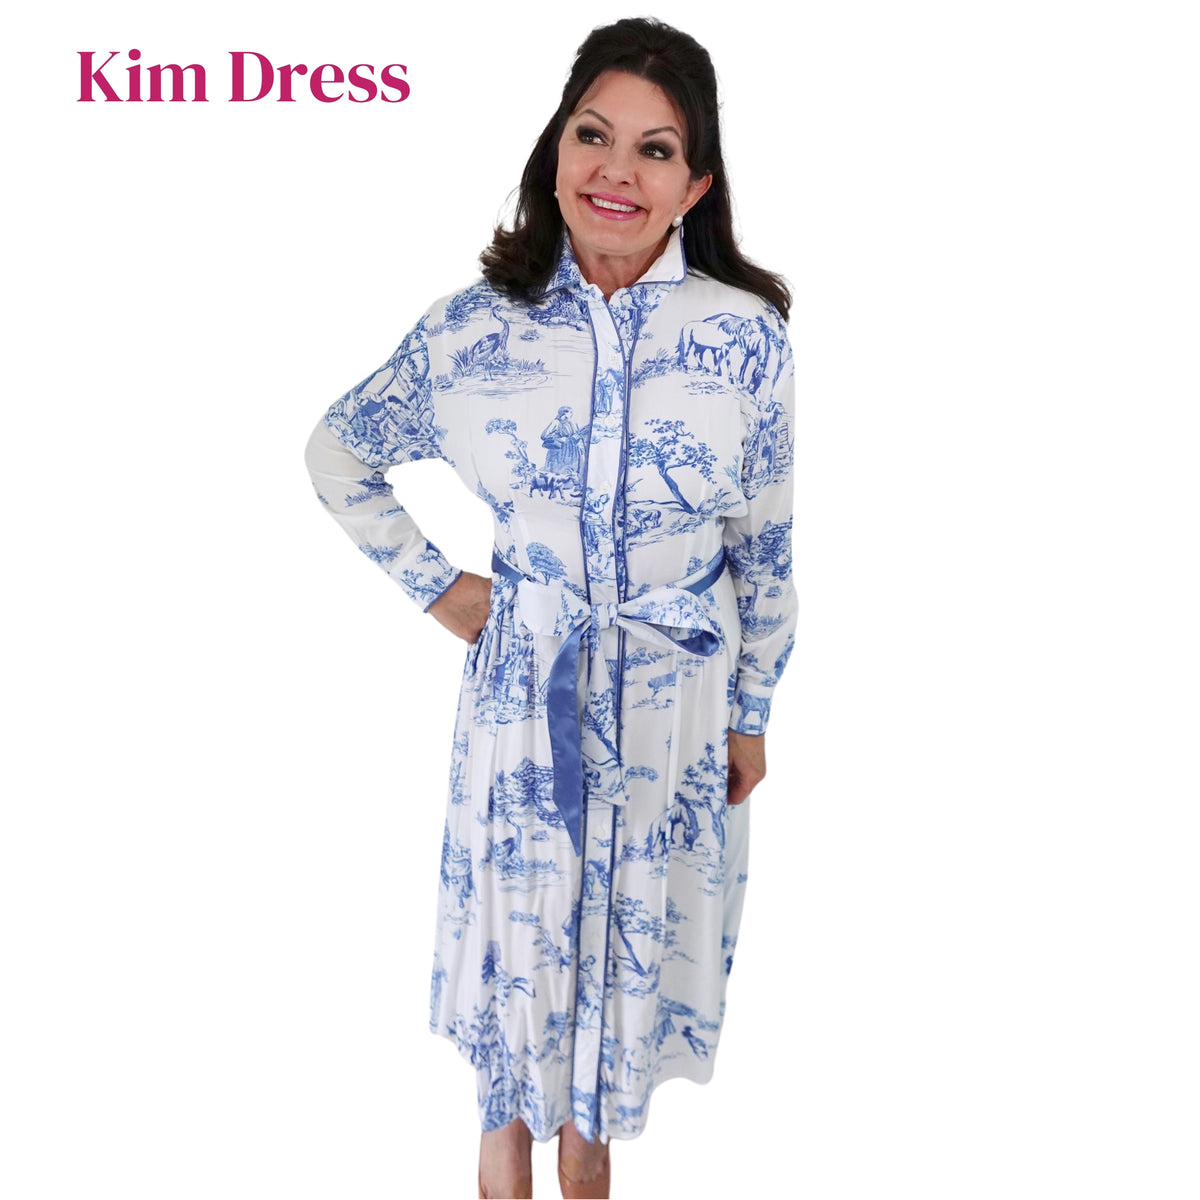 THE KIM DRESS IN BLUE TOILE